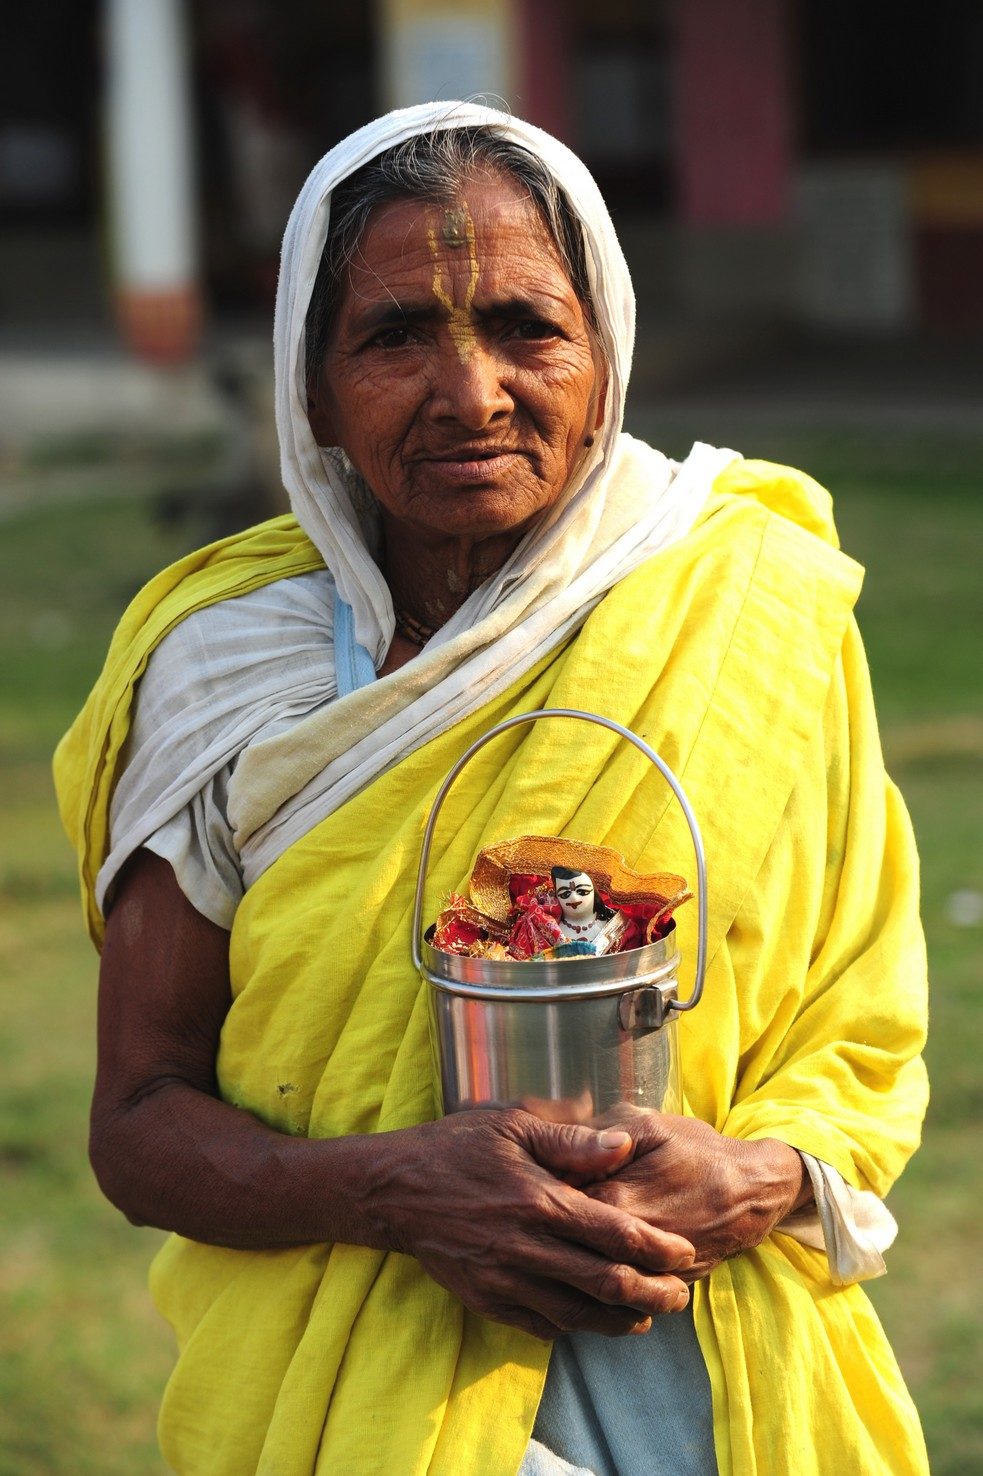 Femme de religion Vaisnava portant une petite statue de Gopal Krishna lors d’un pelerinage